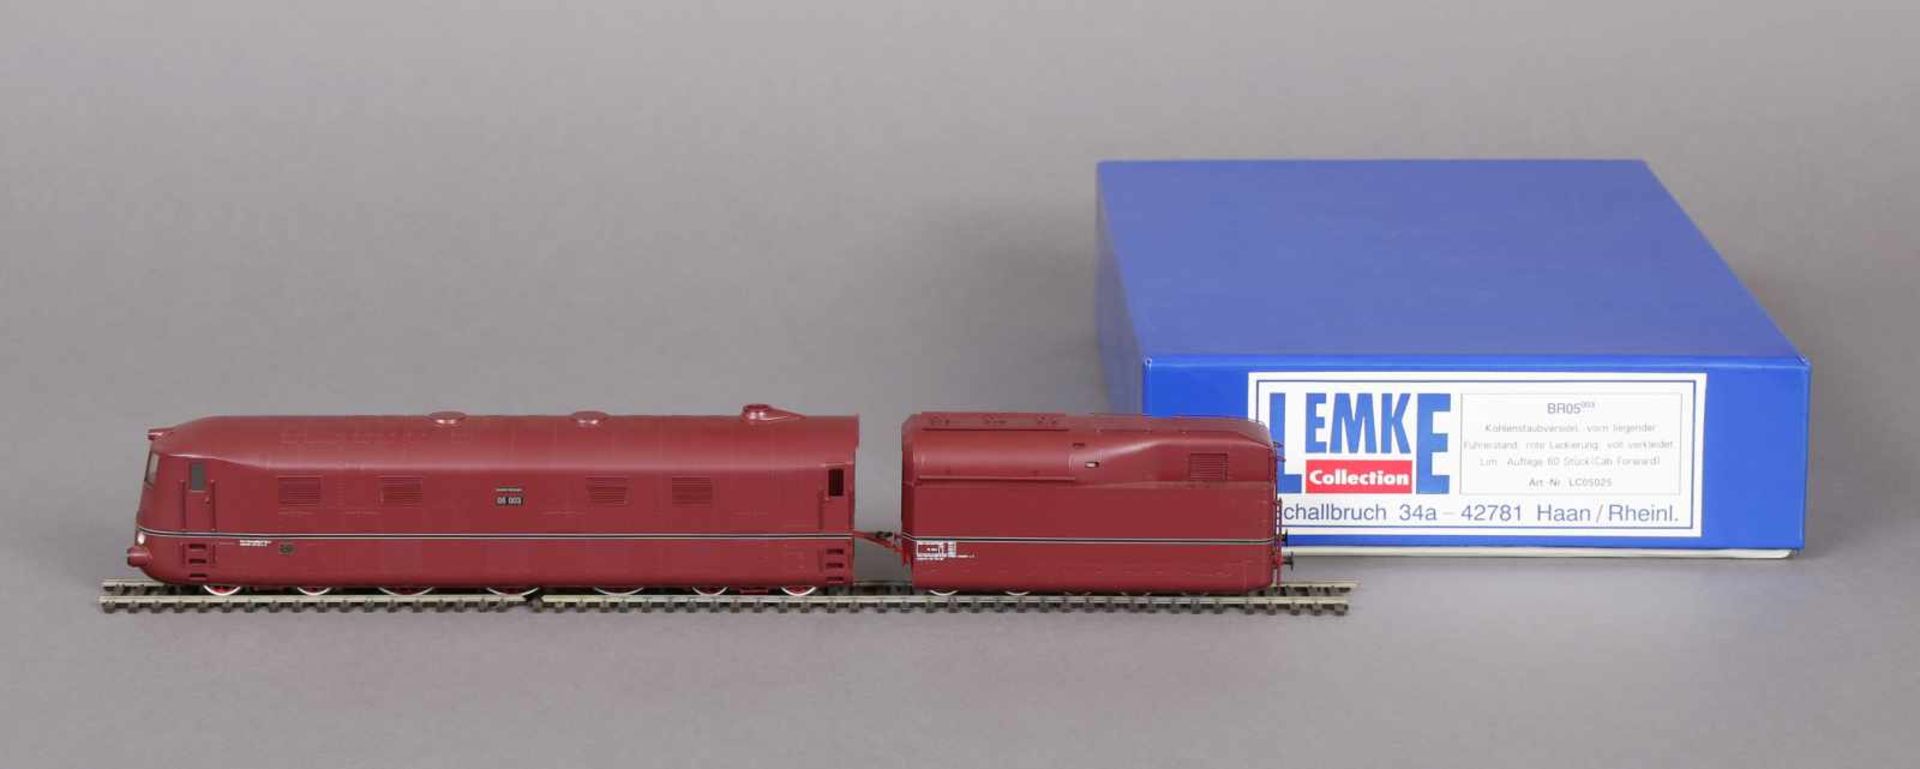 Lemke Modell-Lok mit Tender BR 05 005, Kohlenstaubversion, rote Lackierung, Kleinserie (60 Stk.),